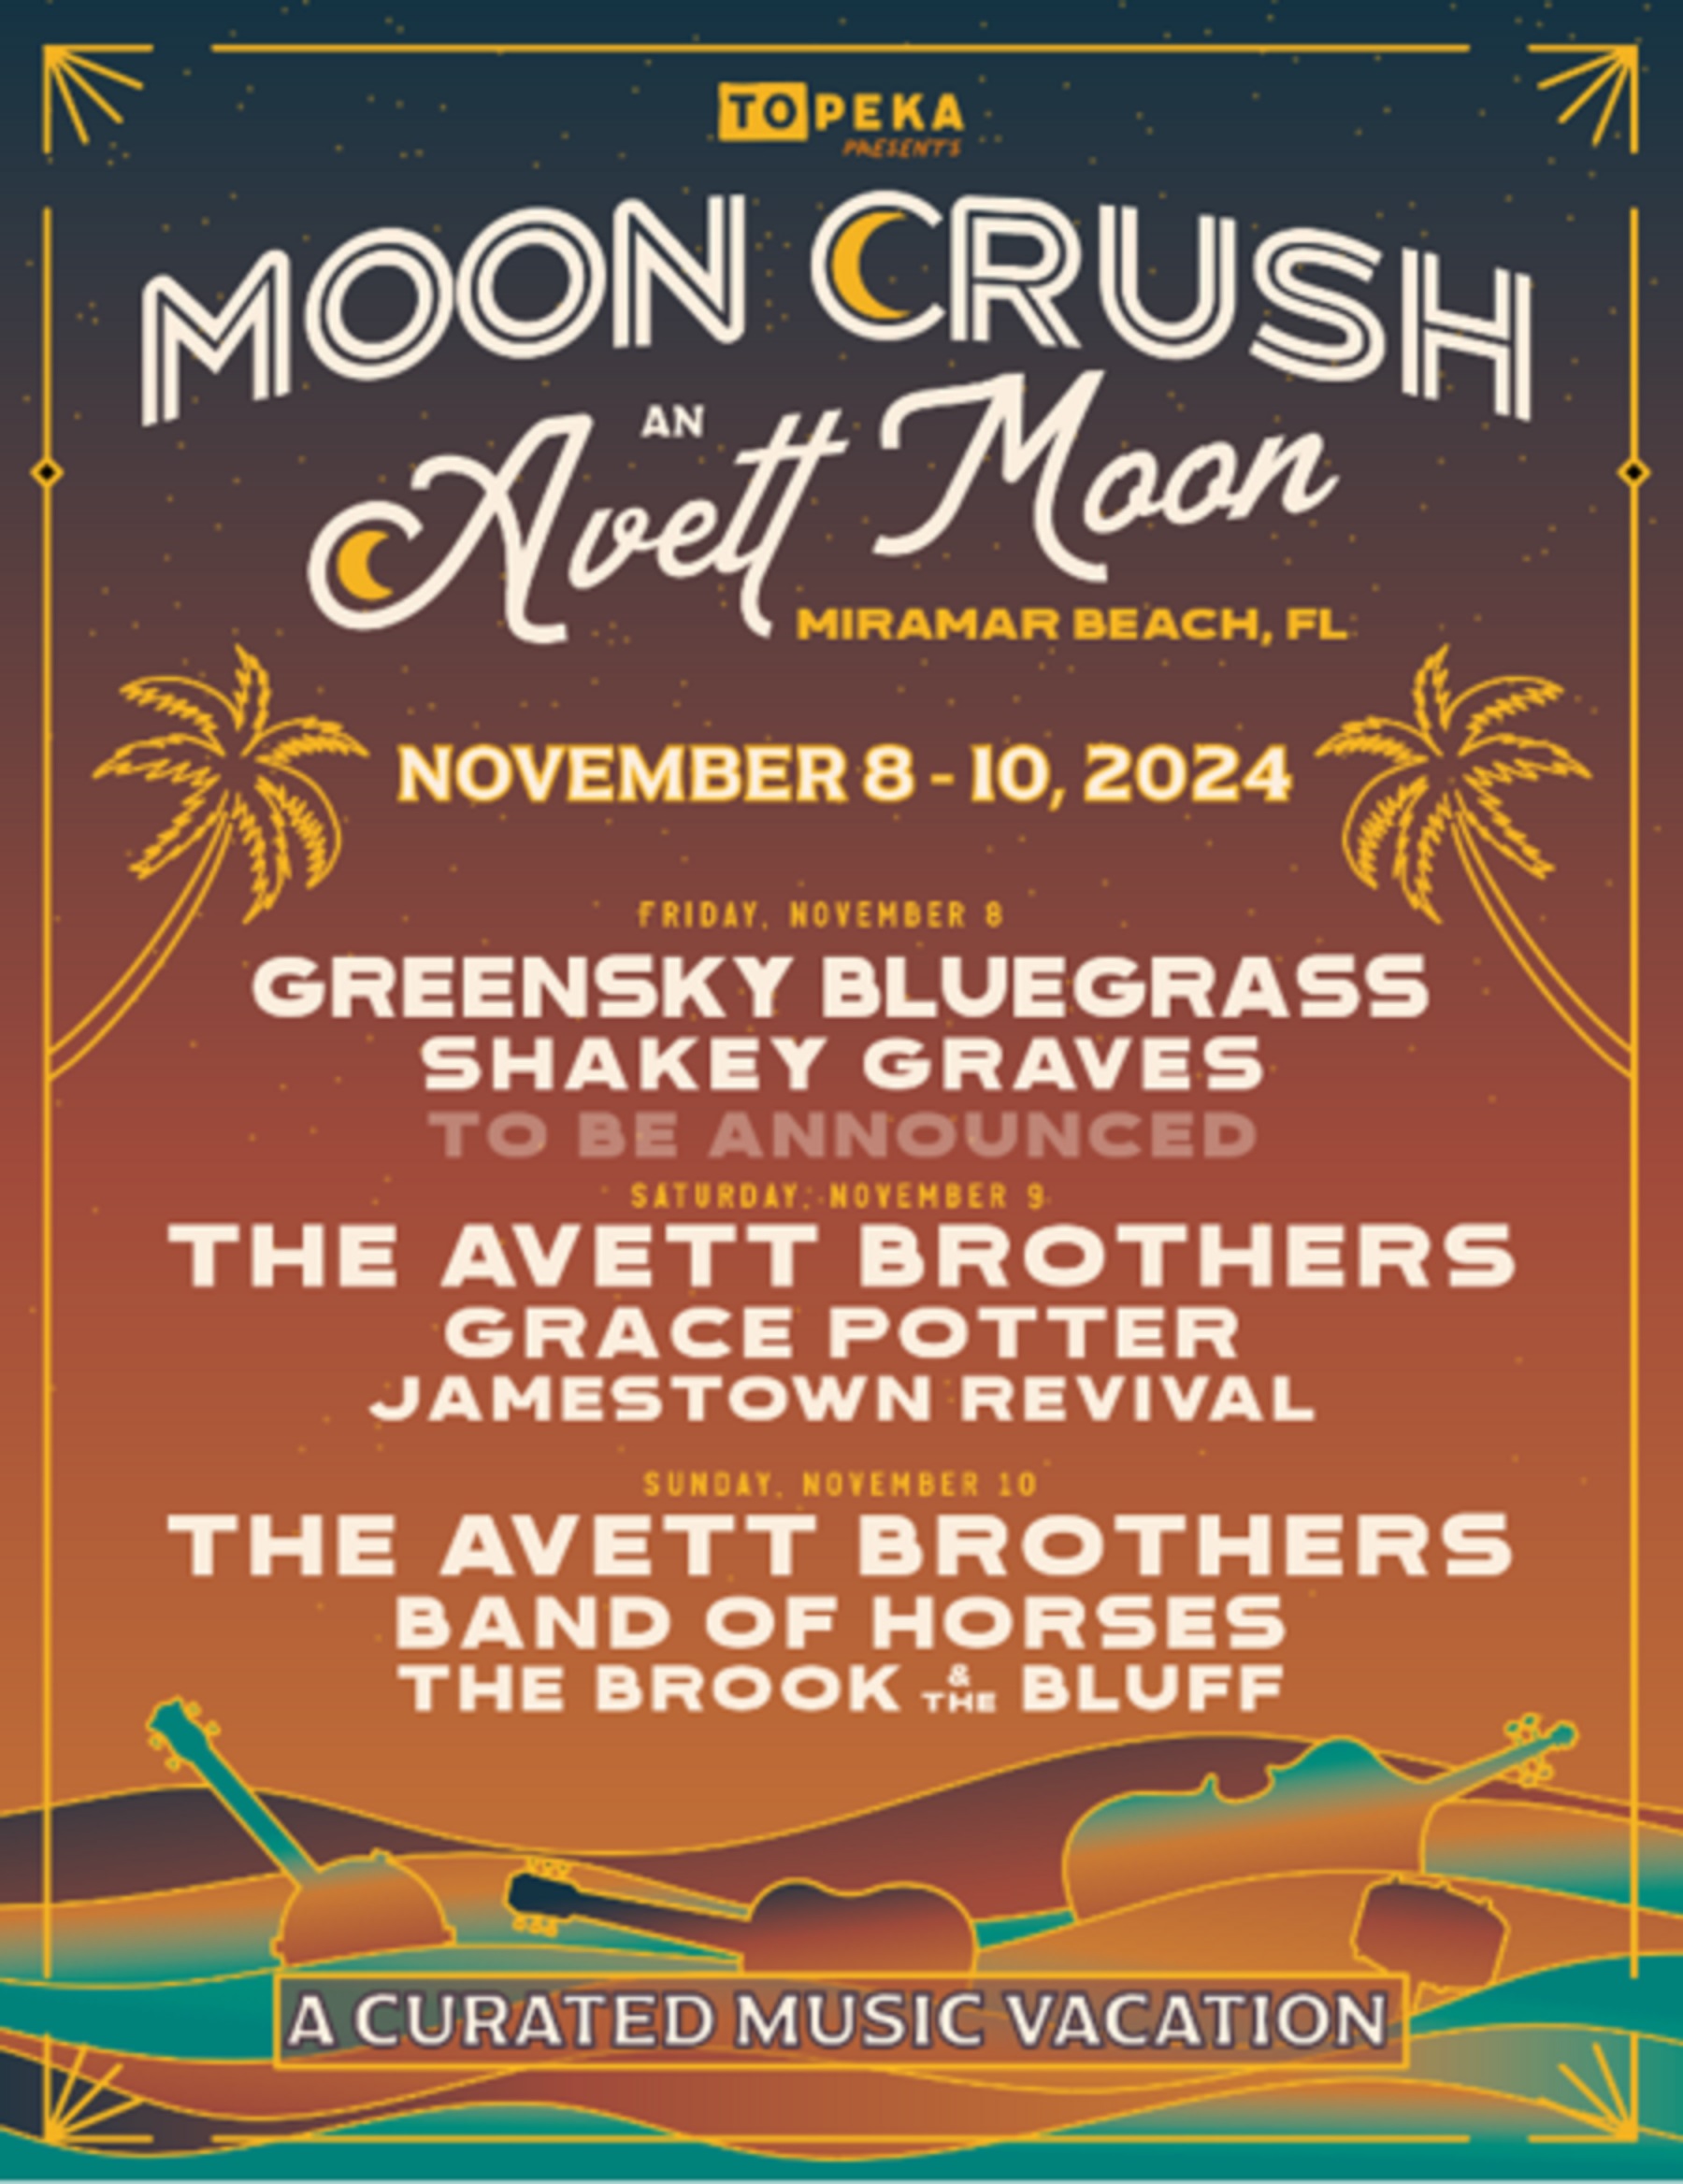 Topeka Presents the Avett Brothers' Moon Crush "Avett Moon" Music